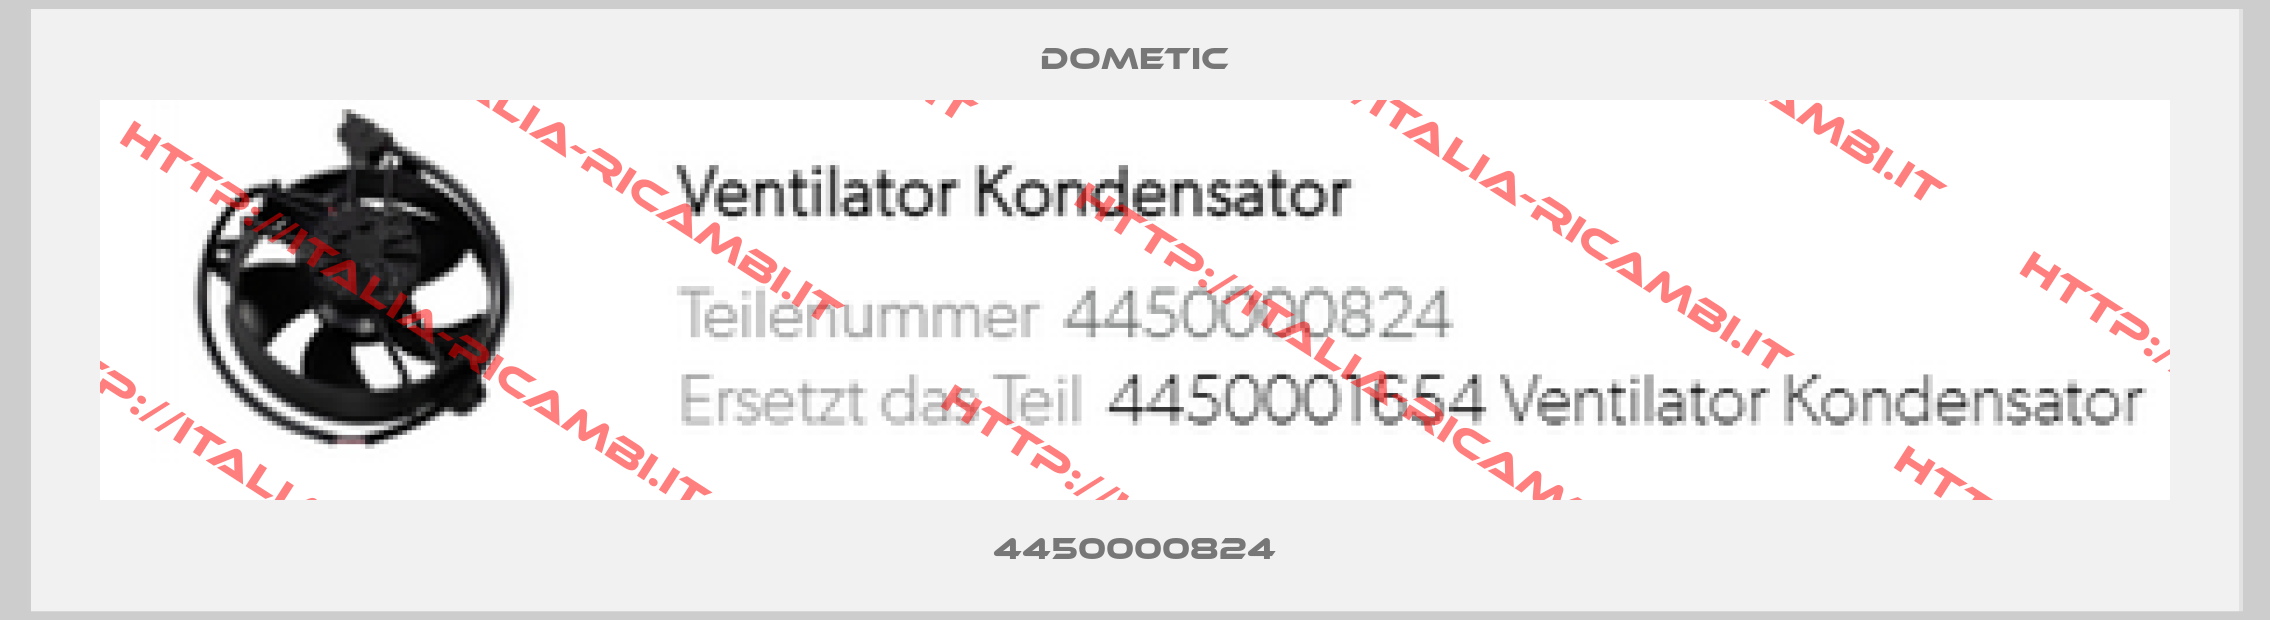 Dometic-4450000824